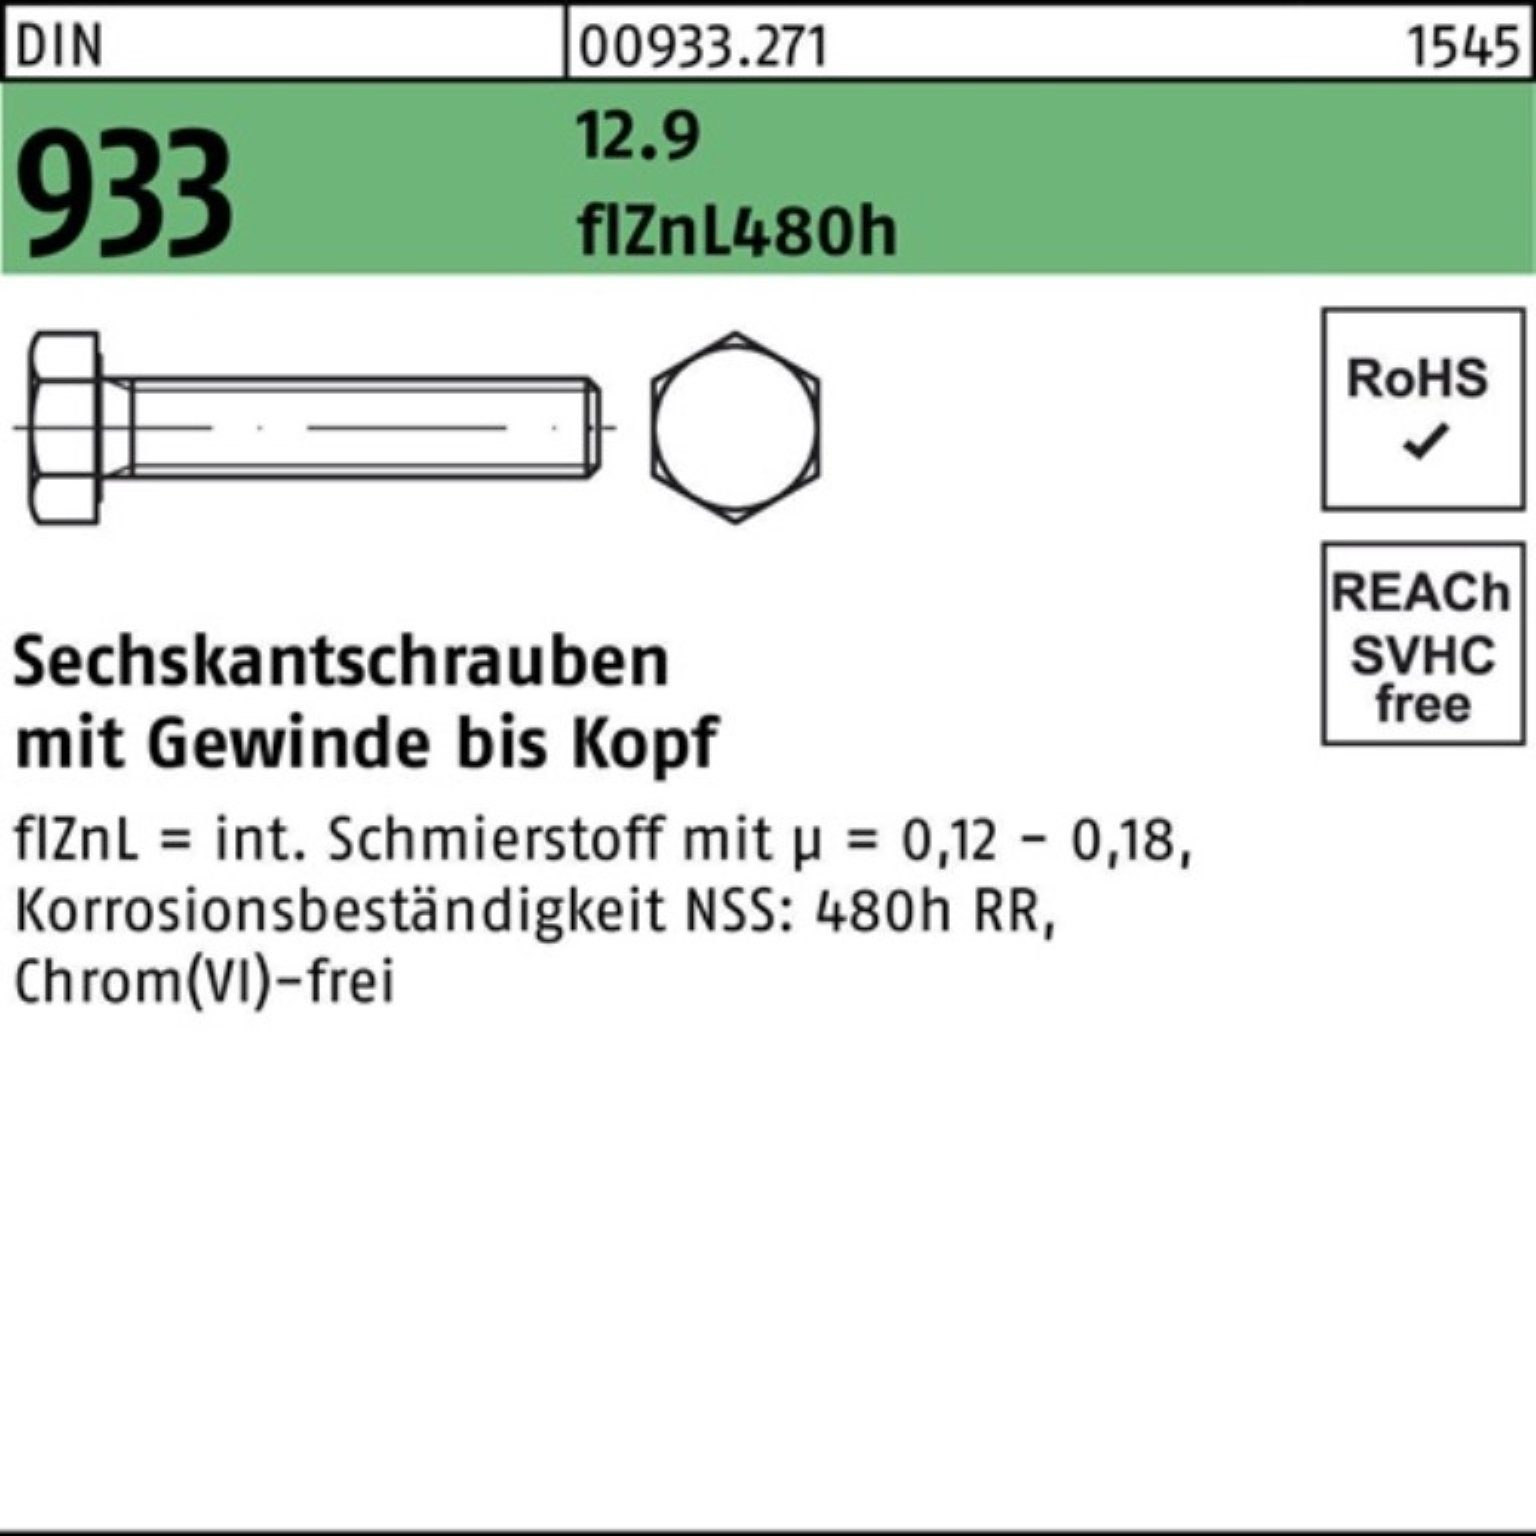 Reyher Sechskantschraube 100er Pack Sechskantschraube DIN 933 VG M16x 60 12.9 flZnL 480h zinkla